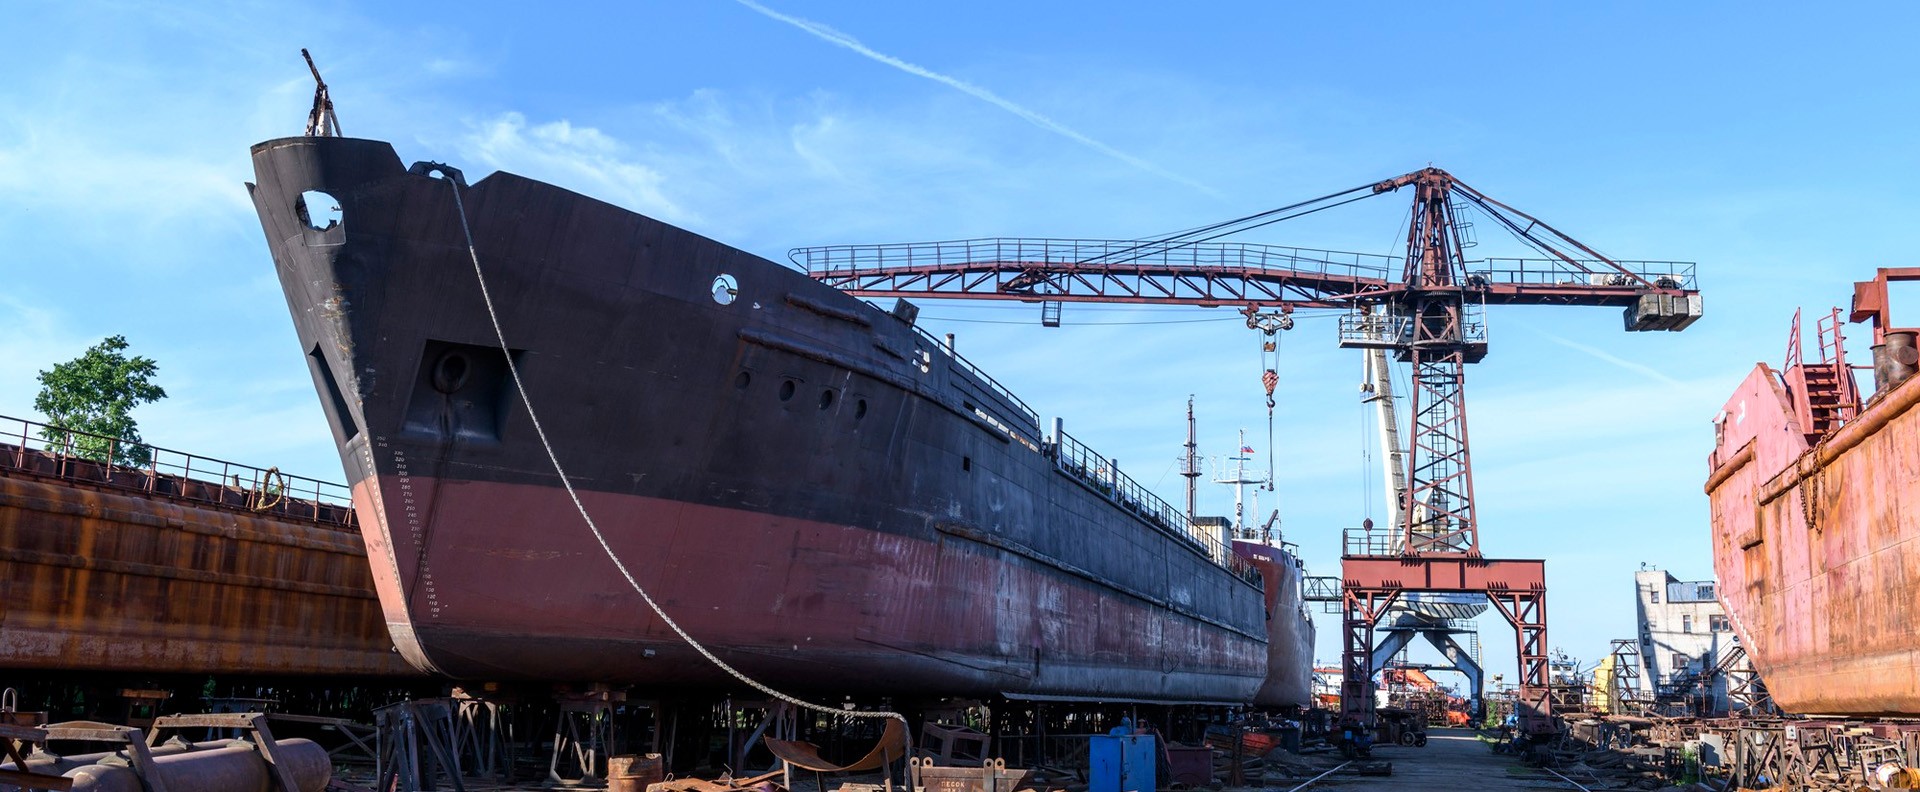 Shipbuilding